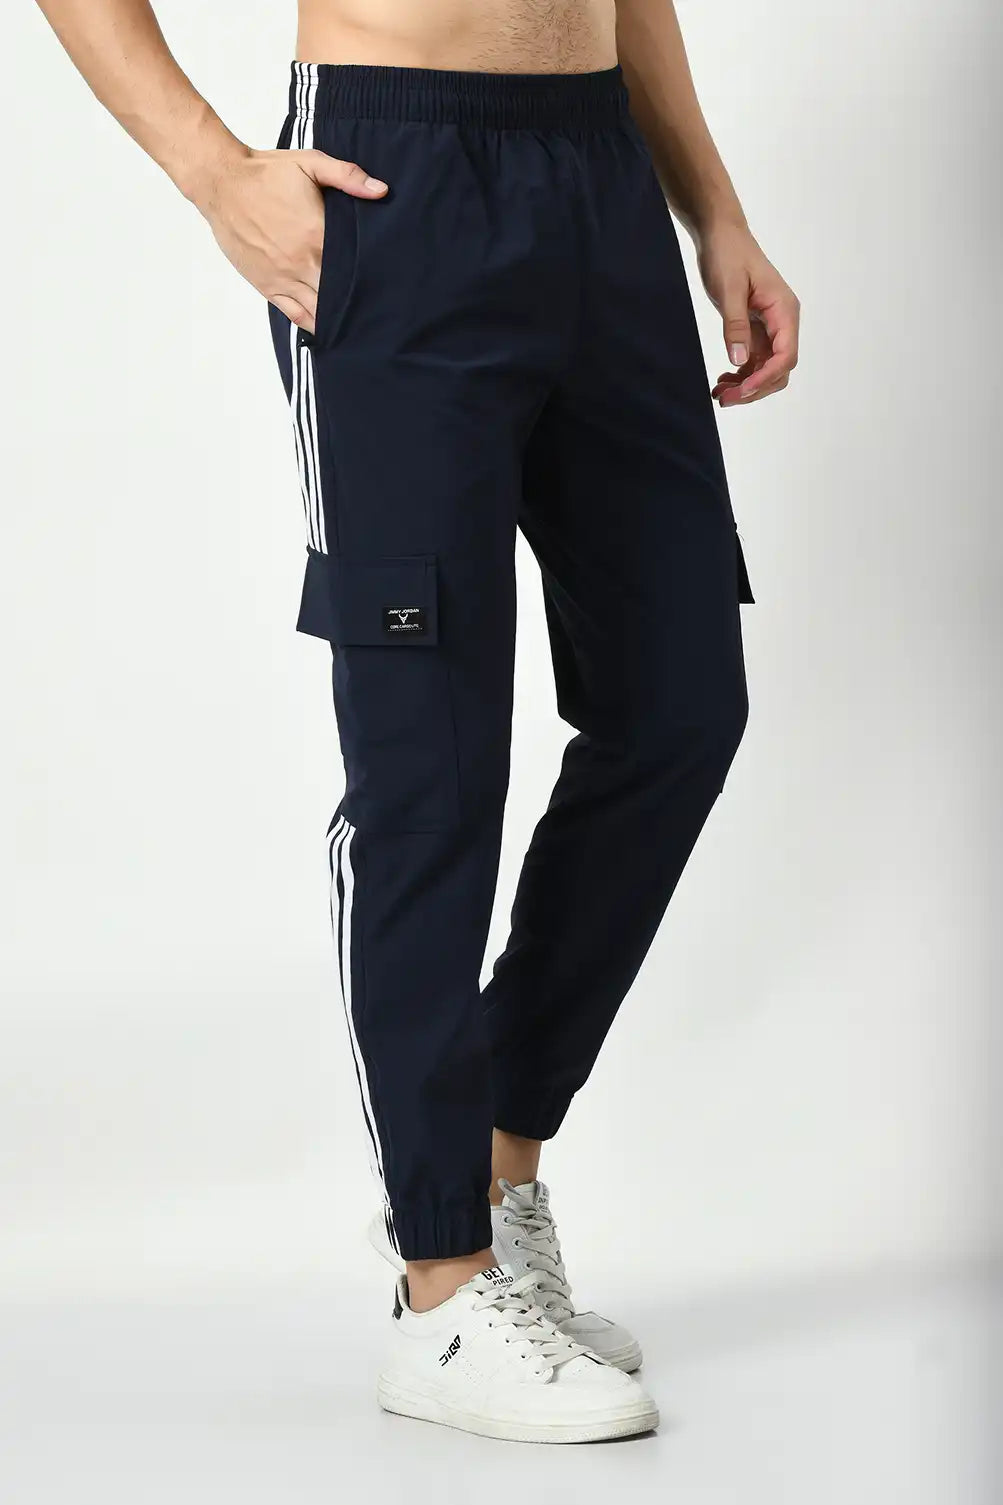 Adidas Men's 3 Quarter Pants , Men's Fashion, Bottoms, Shorts on Carousell